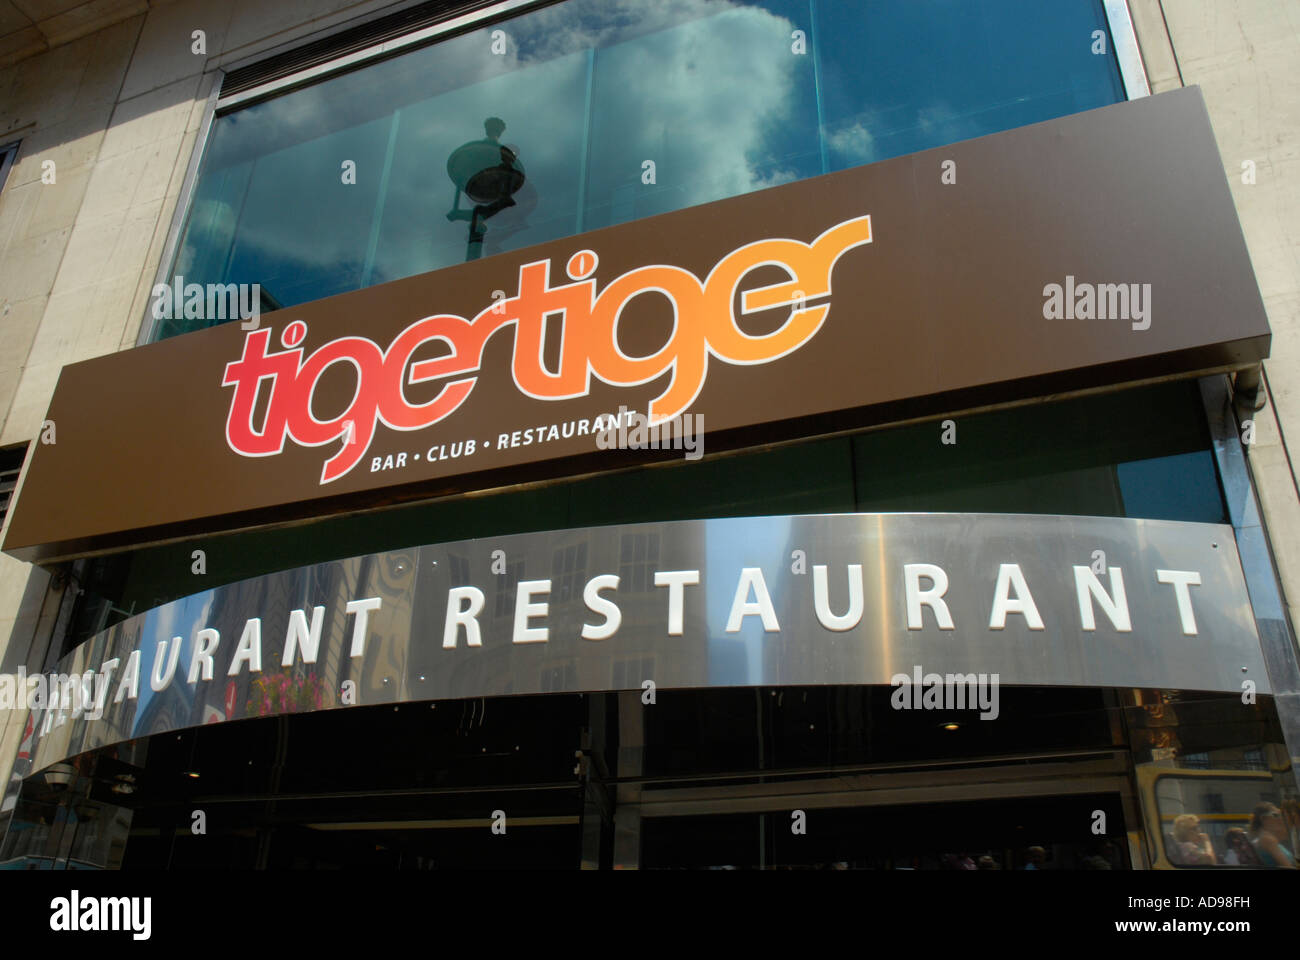 Exterior of Tiger Tiger bar restaurant in the Haymarket London England Stock Photo